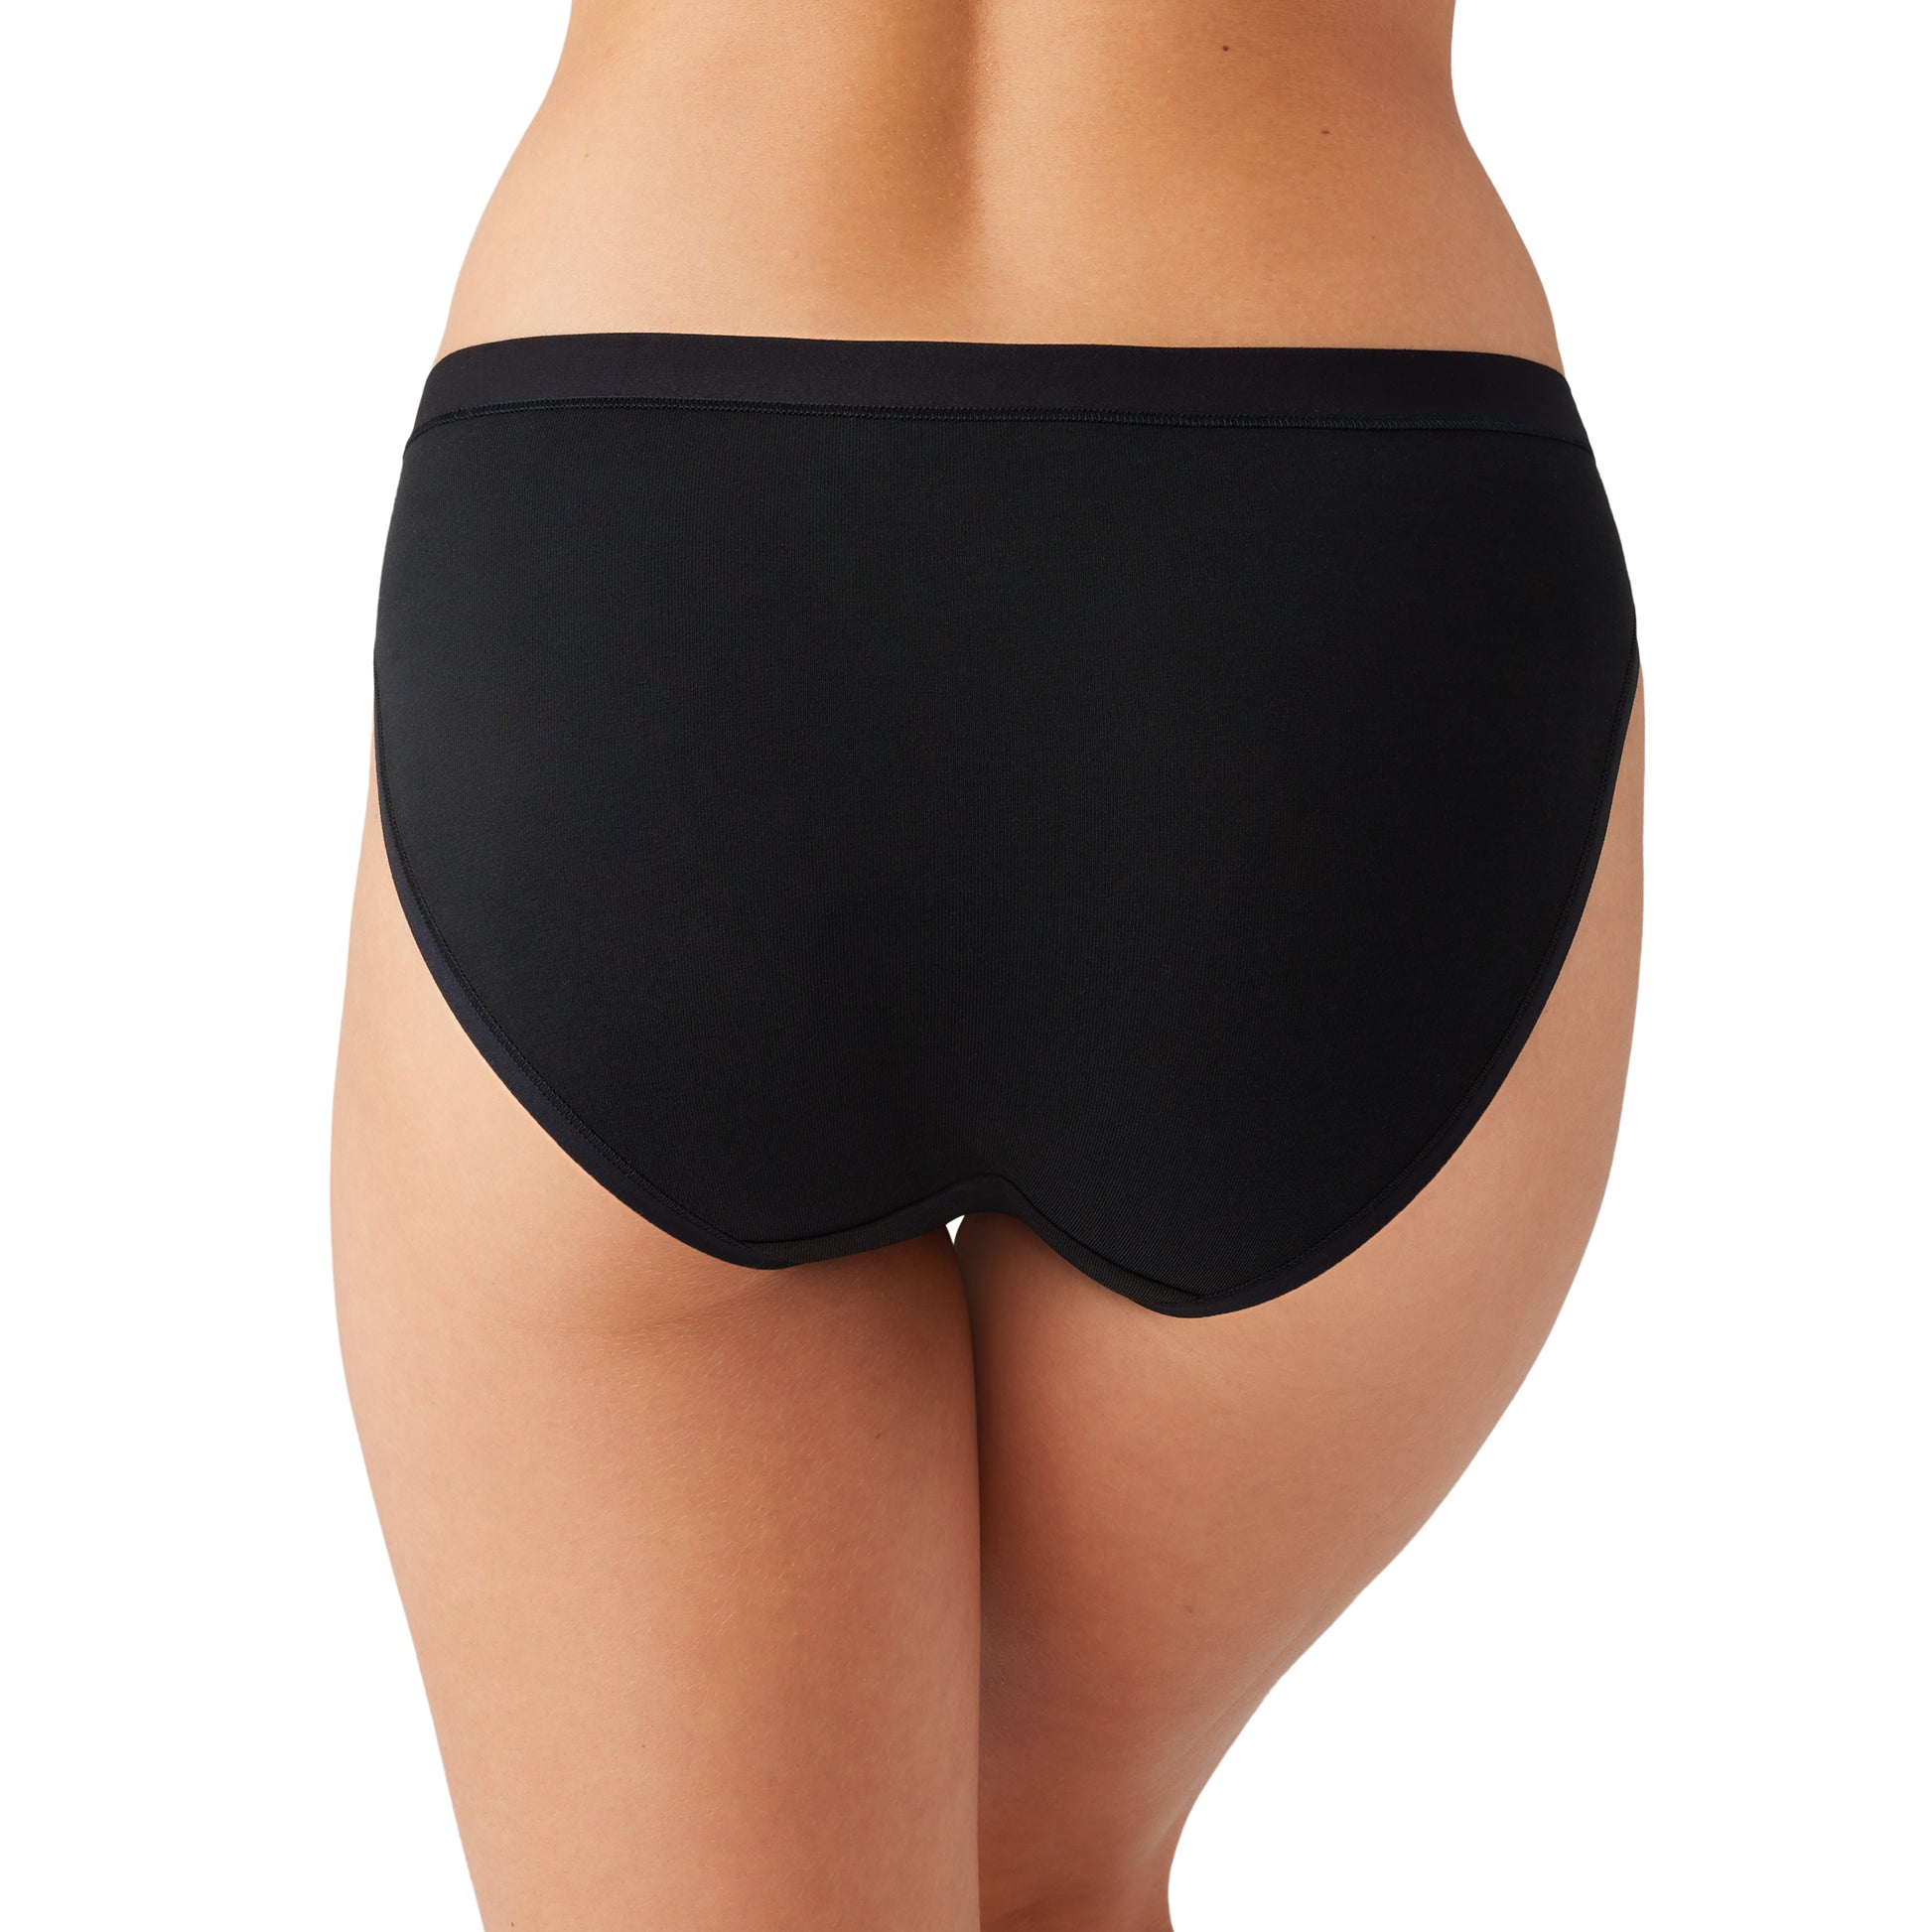 Understated Cotton Bikini Brief - 870362 - Sand/Black Bras & Lingerie - Underwear - Hi-Cut Wacoal   